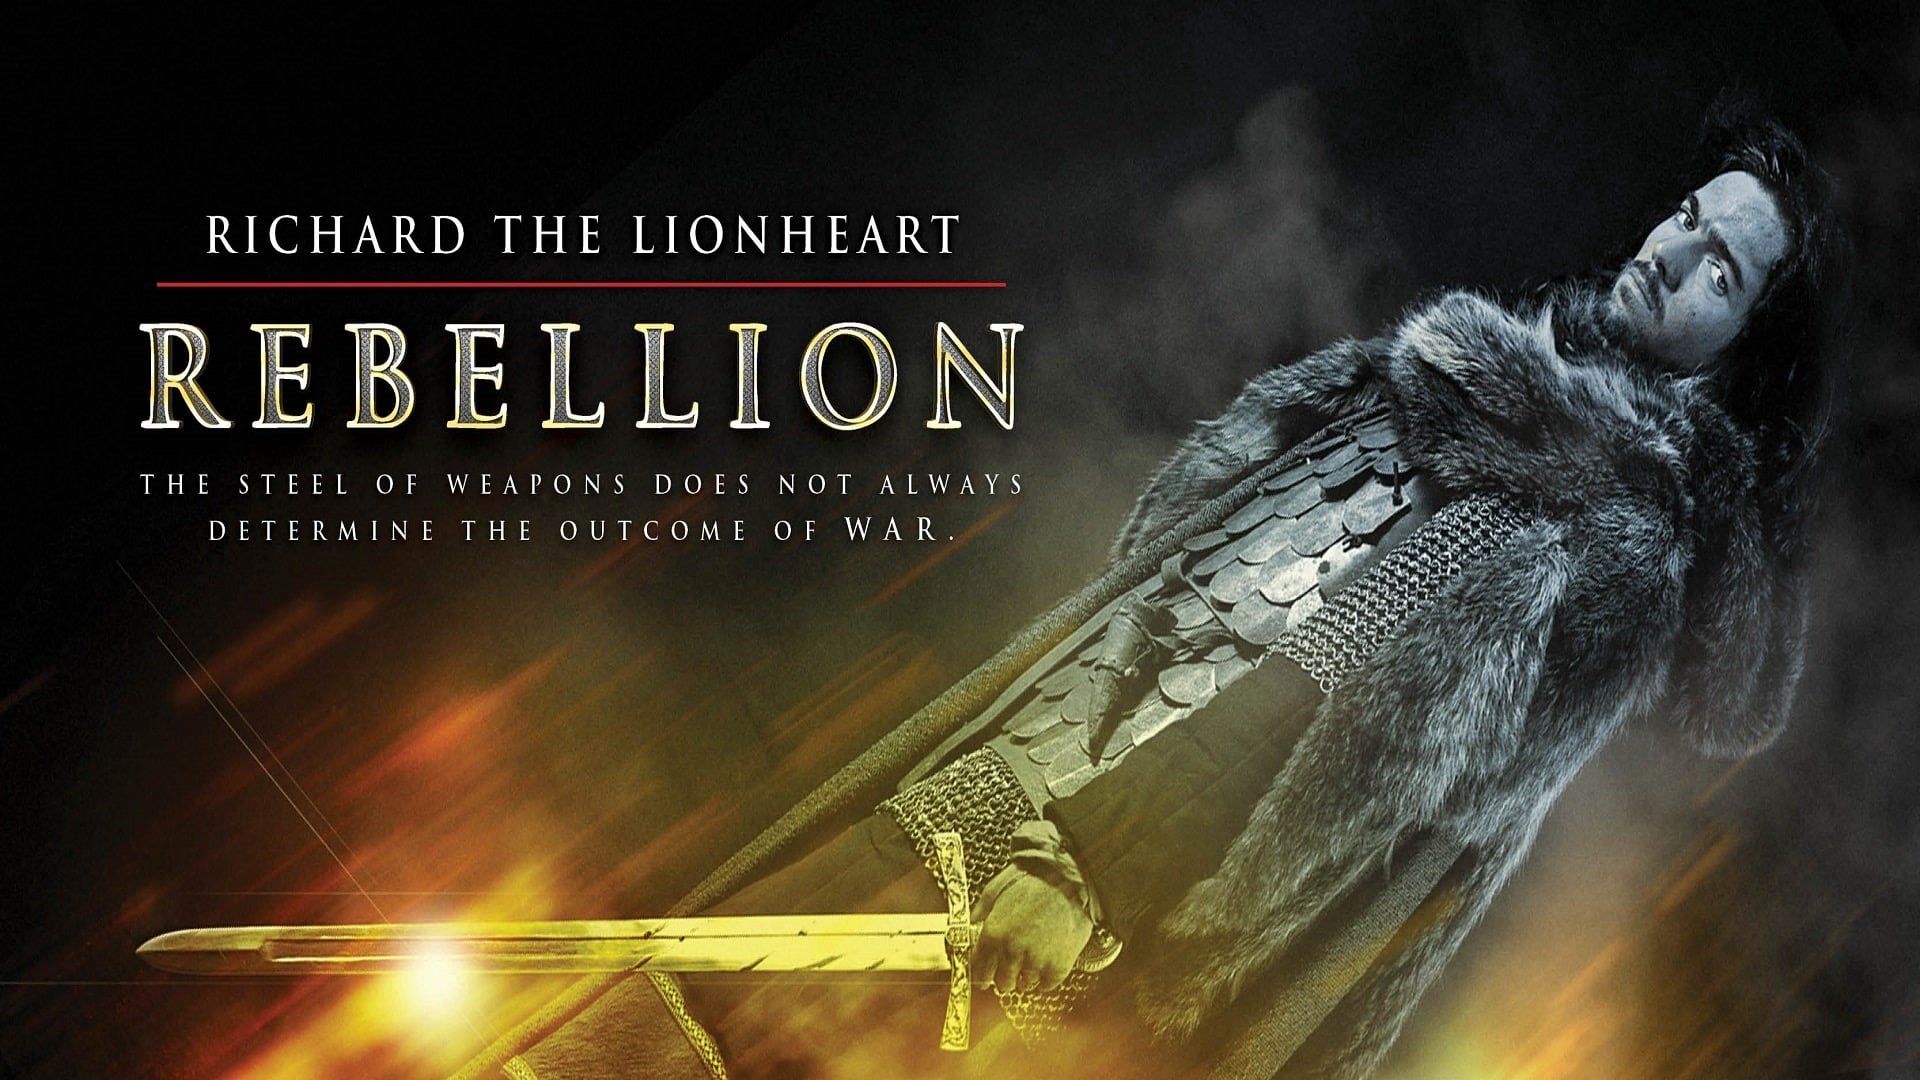 Richard the Lionheart: Rebellion background